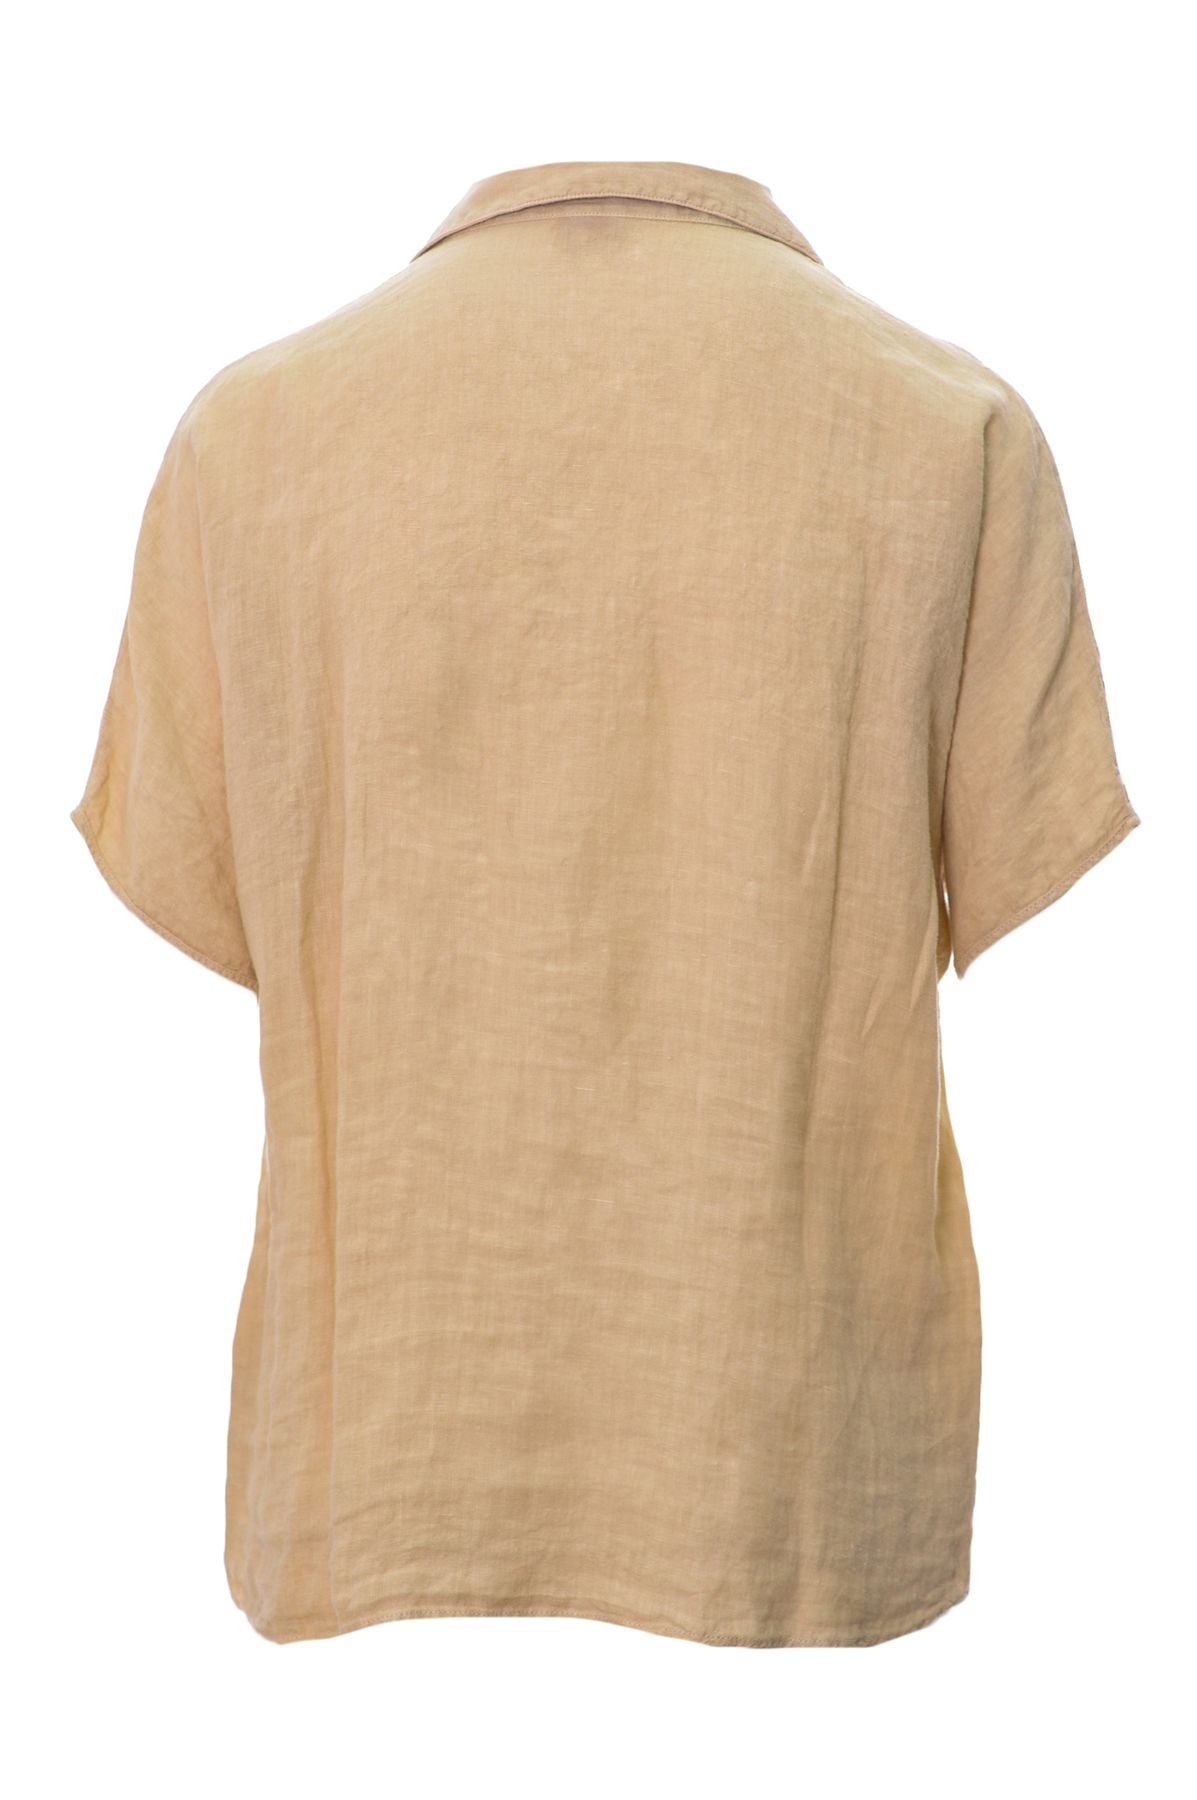 FAY Spring/Summer Linen Shirts